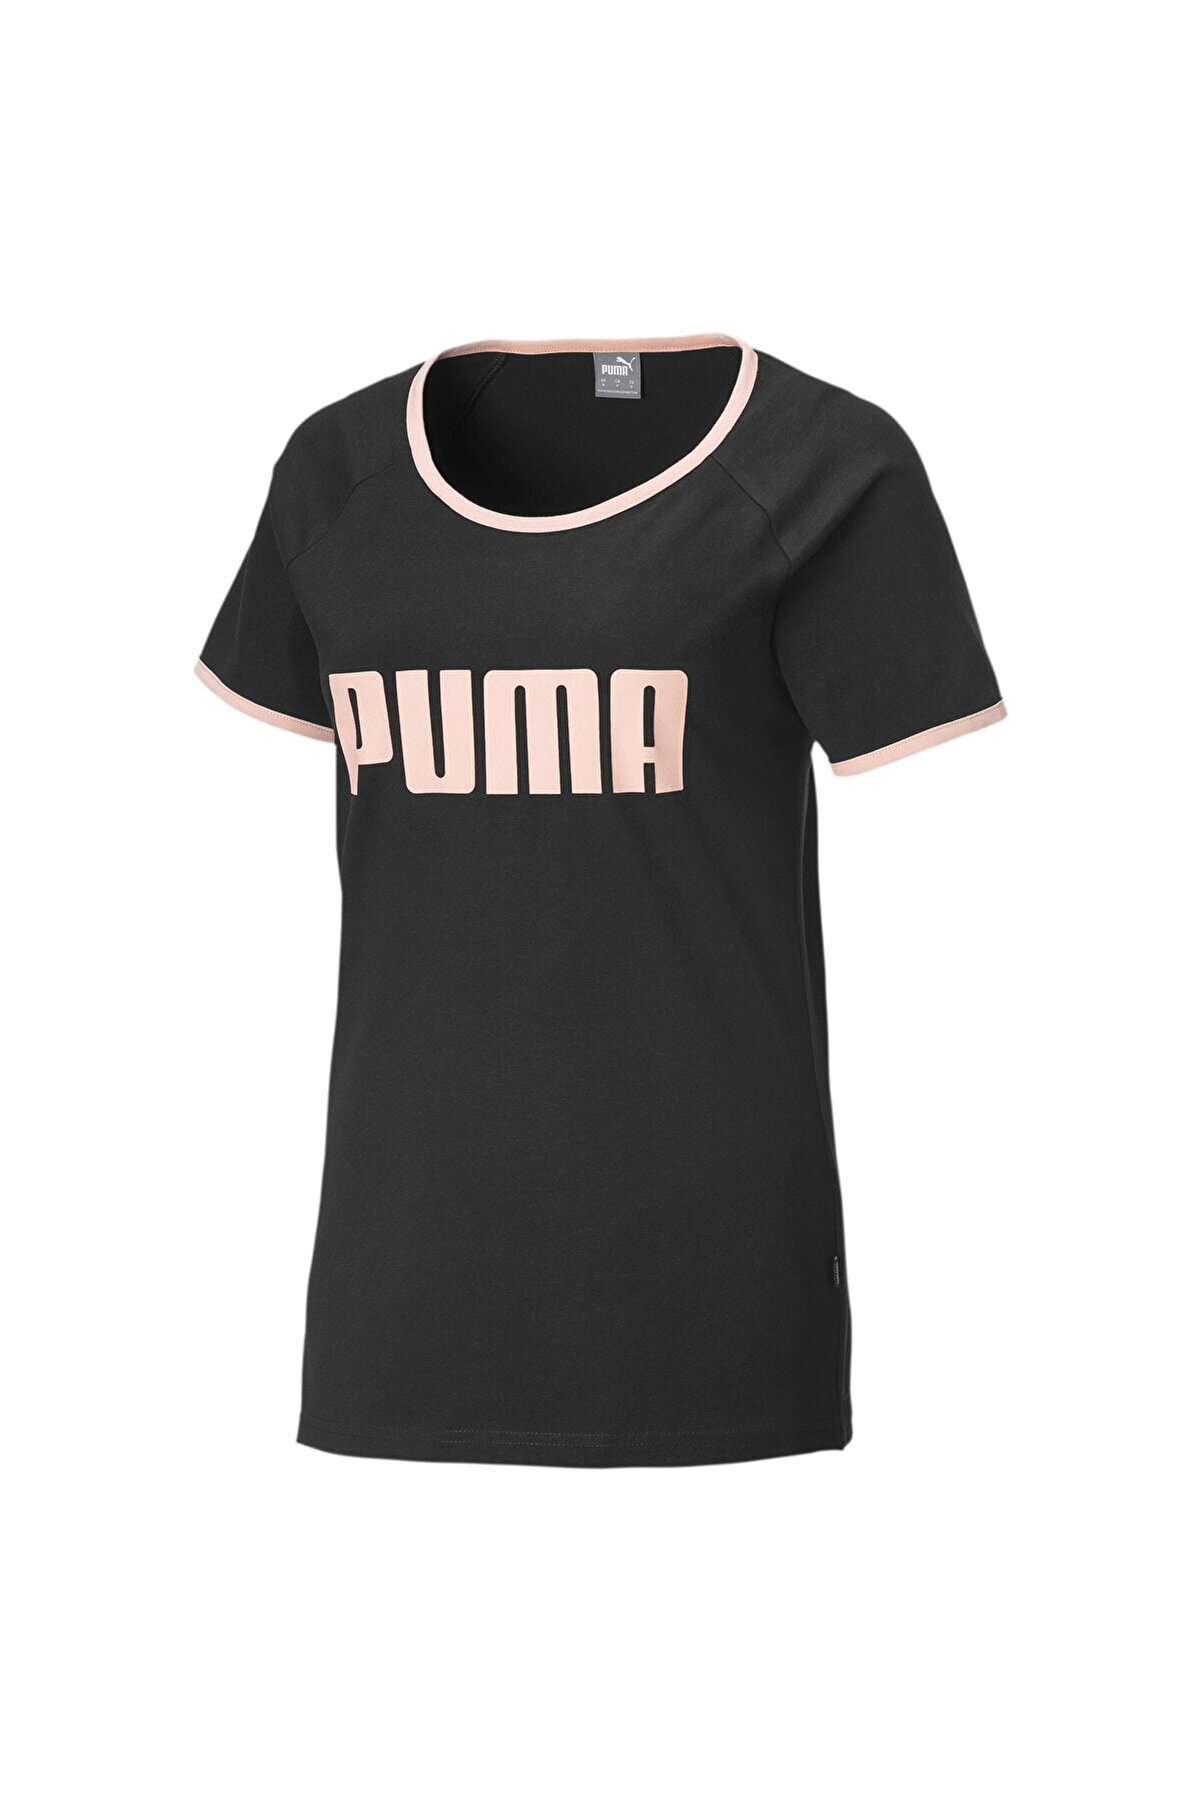 Puma Contrast Kadın T-shirt